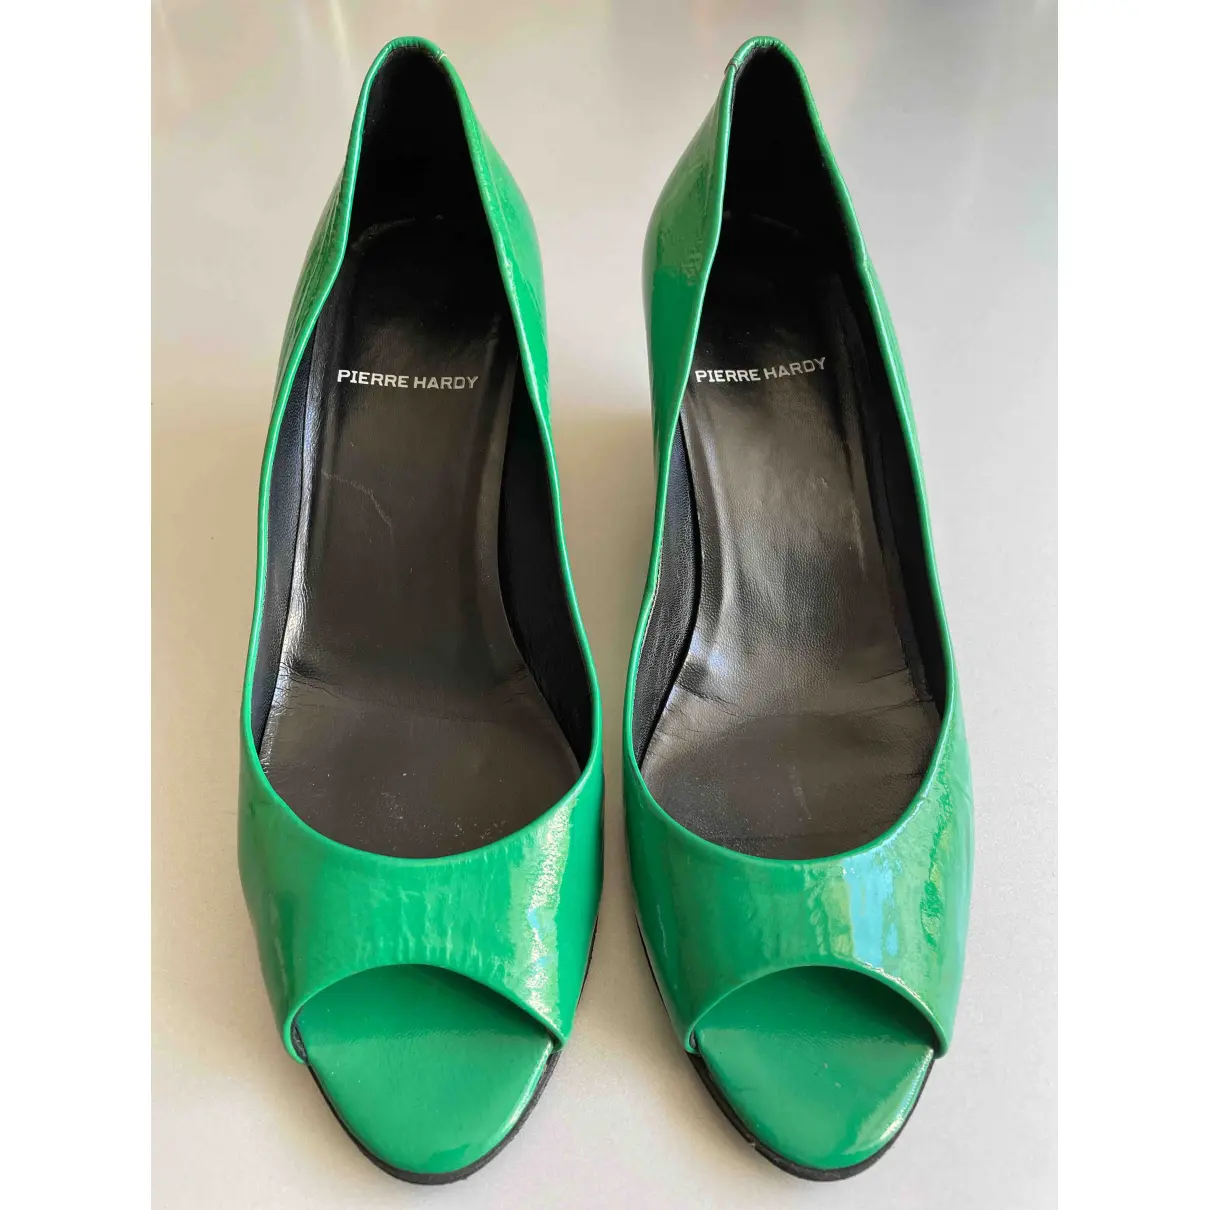 Buy Pierre Hardy Patent leather heels online